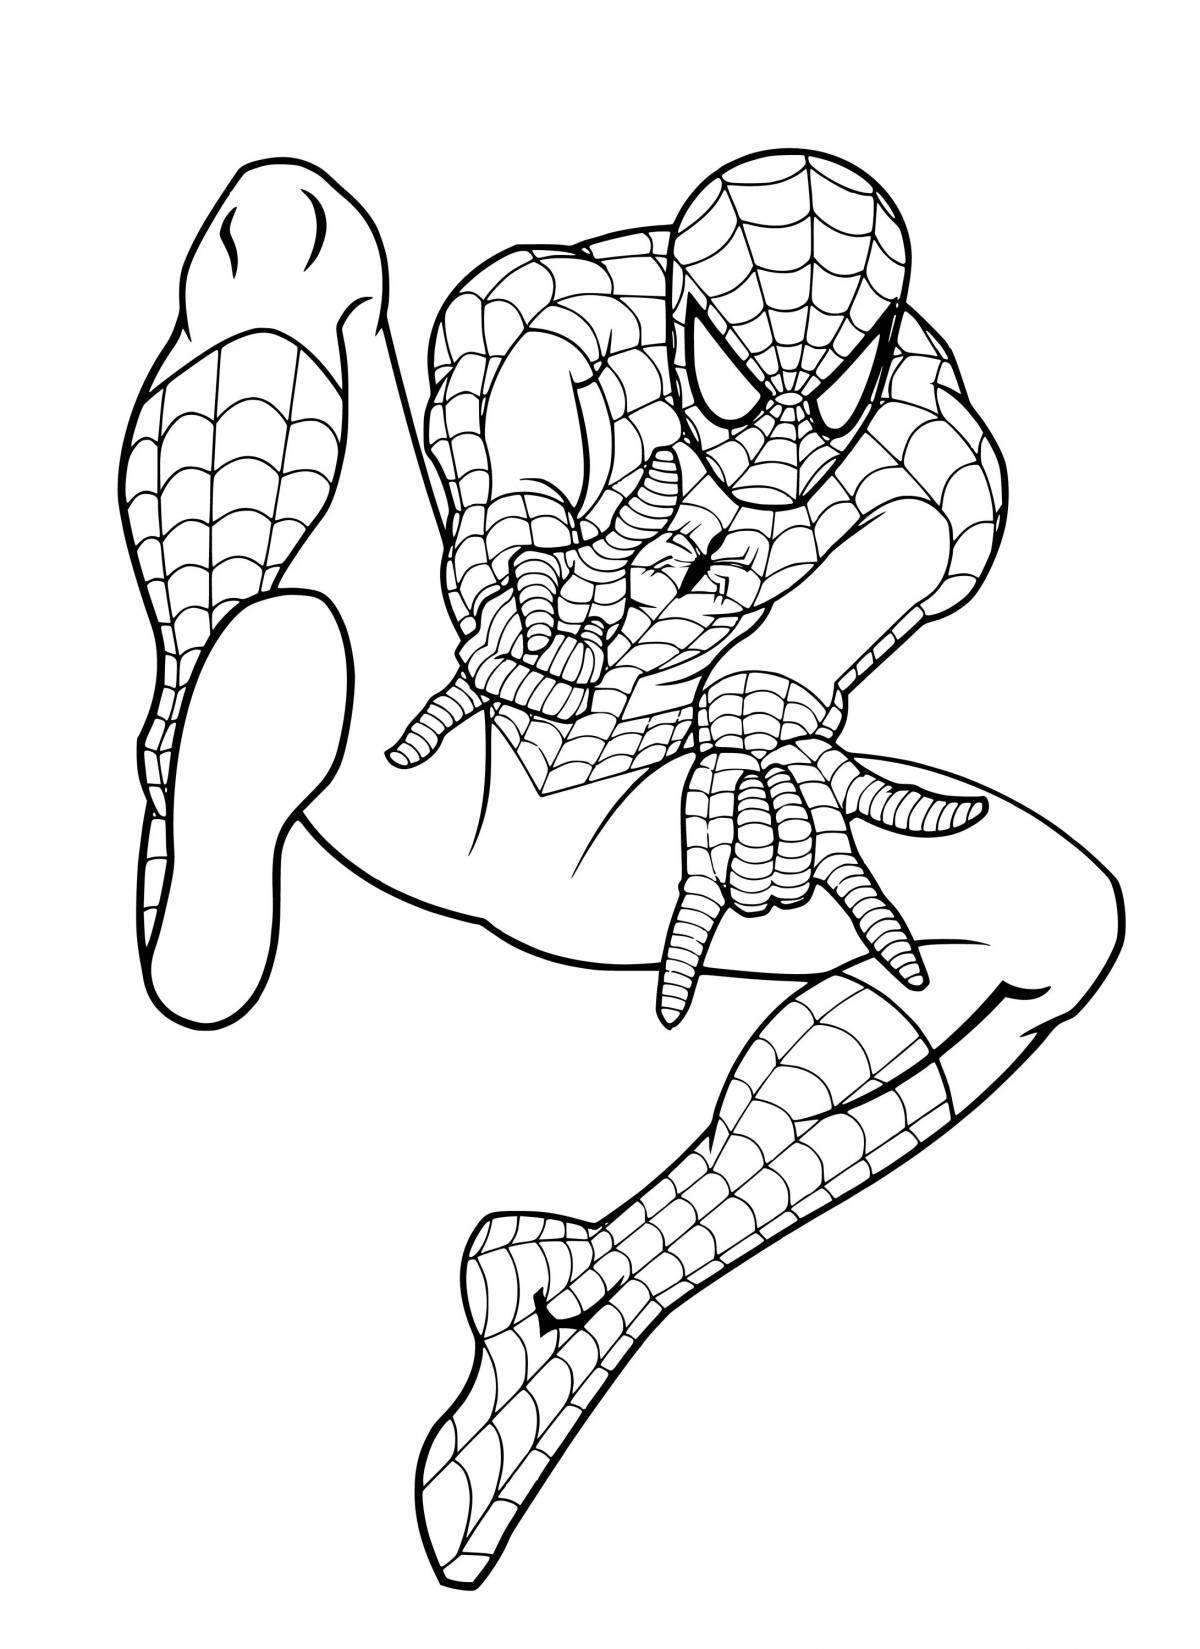 Spiderman's creative coloring book